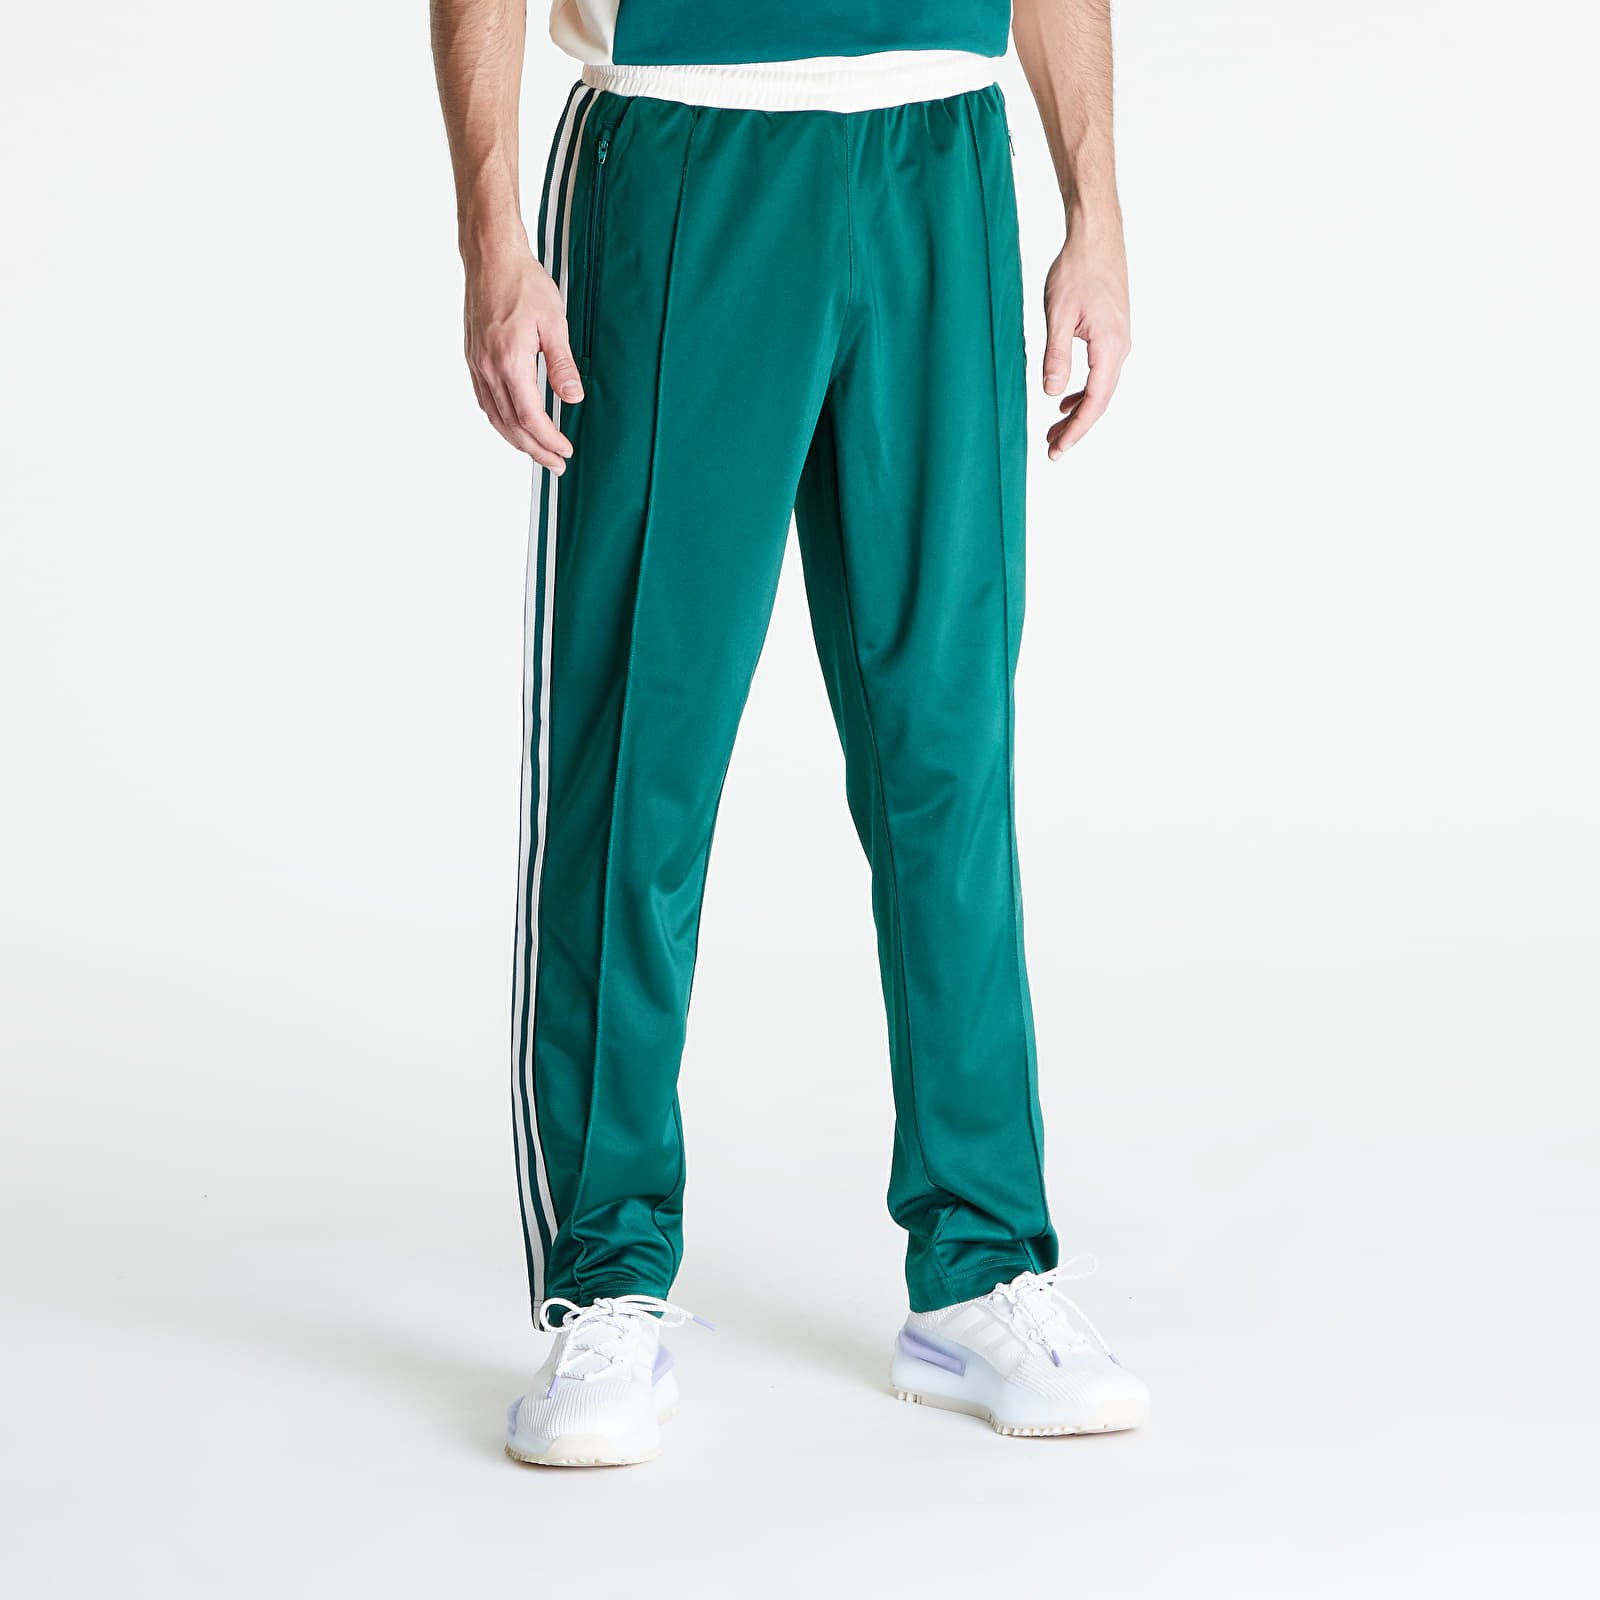 Adidas Originals x Jeremy Scott Firebird Track Pants | Connecticut Post Mall